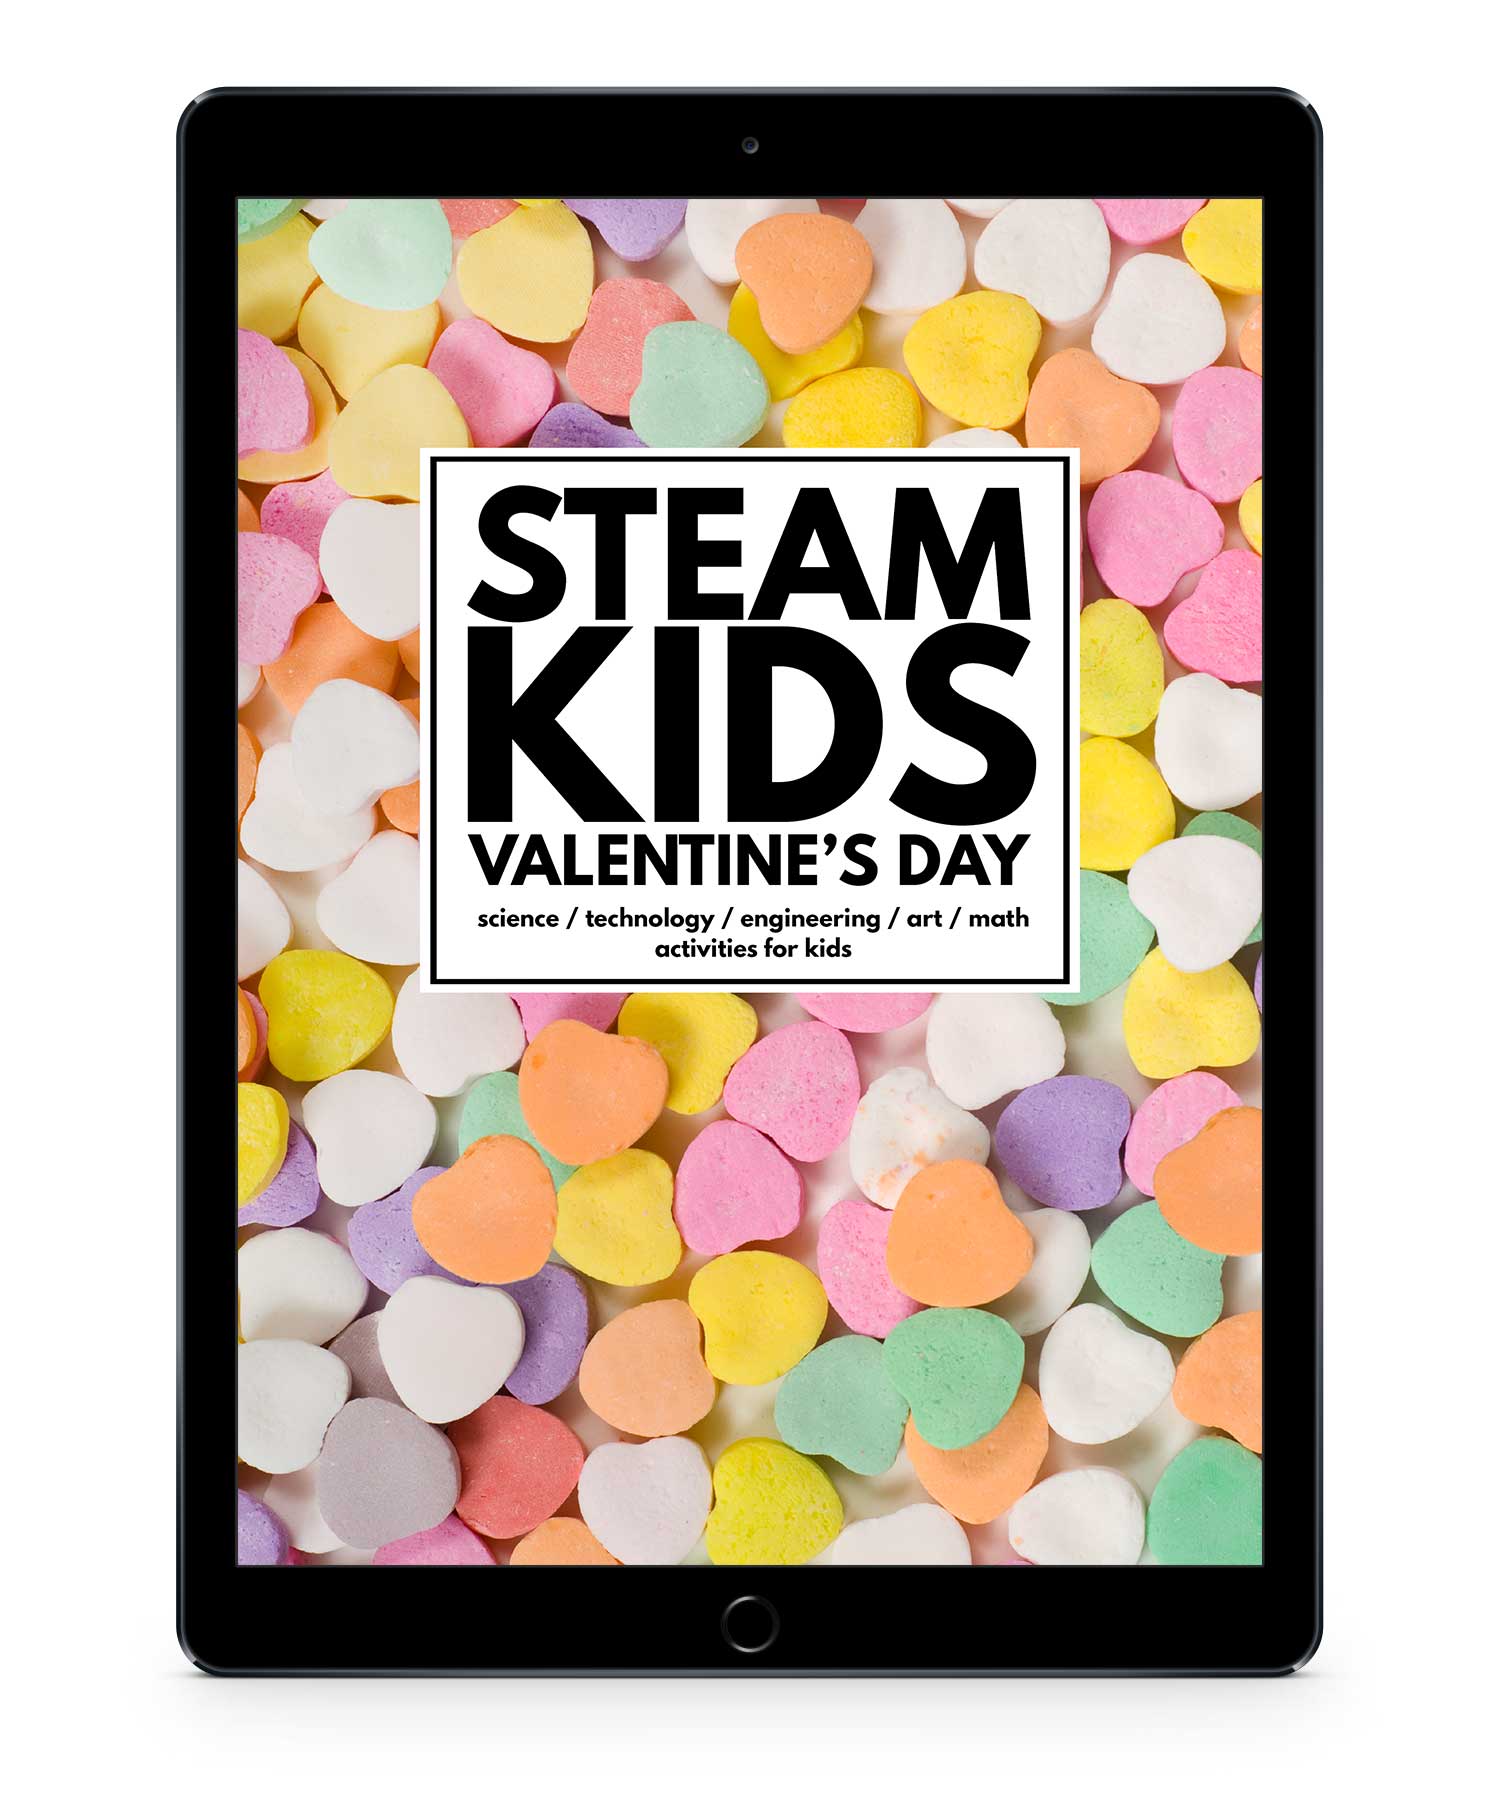 STEAM-Kids-Valentines-Day-Black-iPad-transparent-background-web